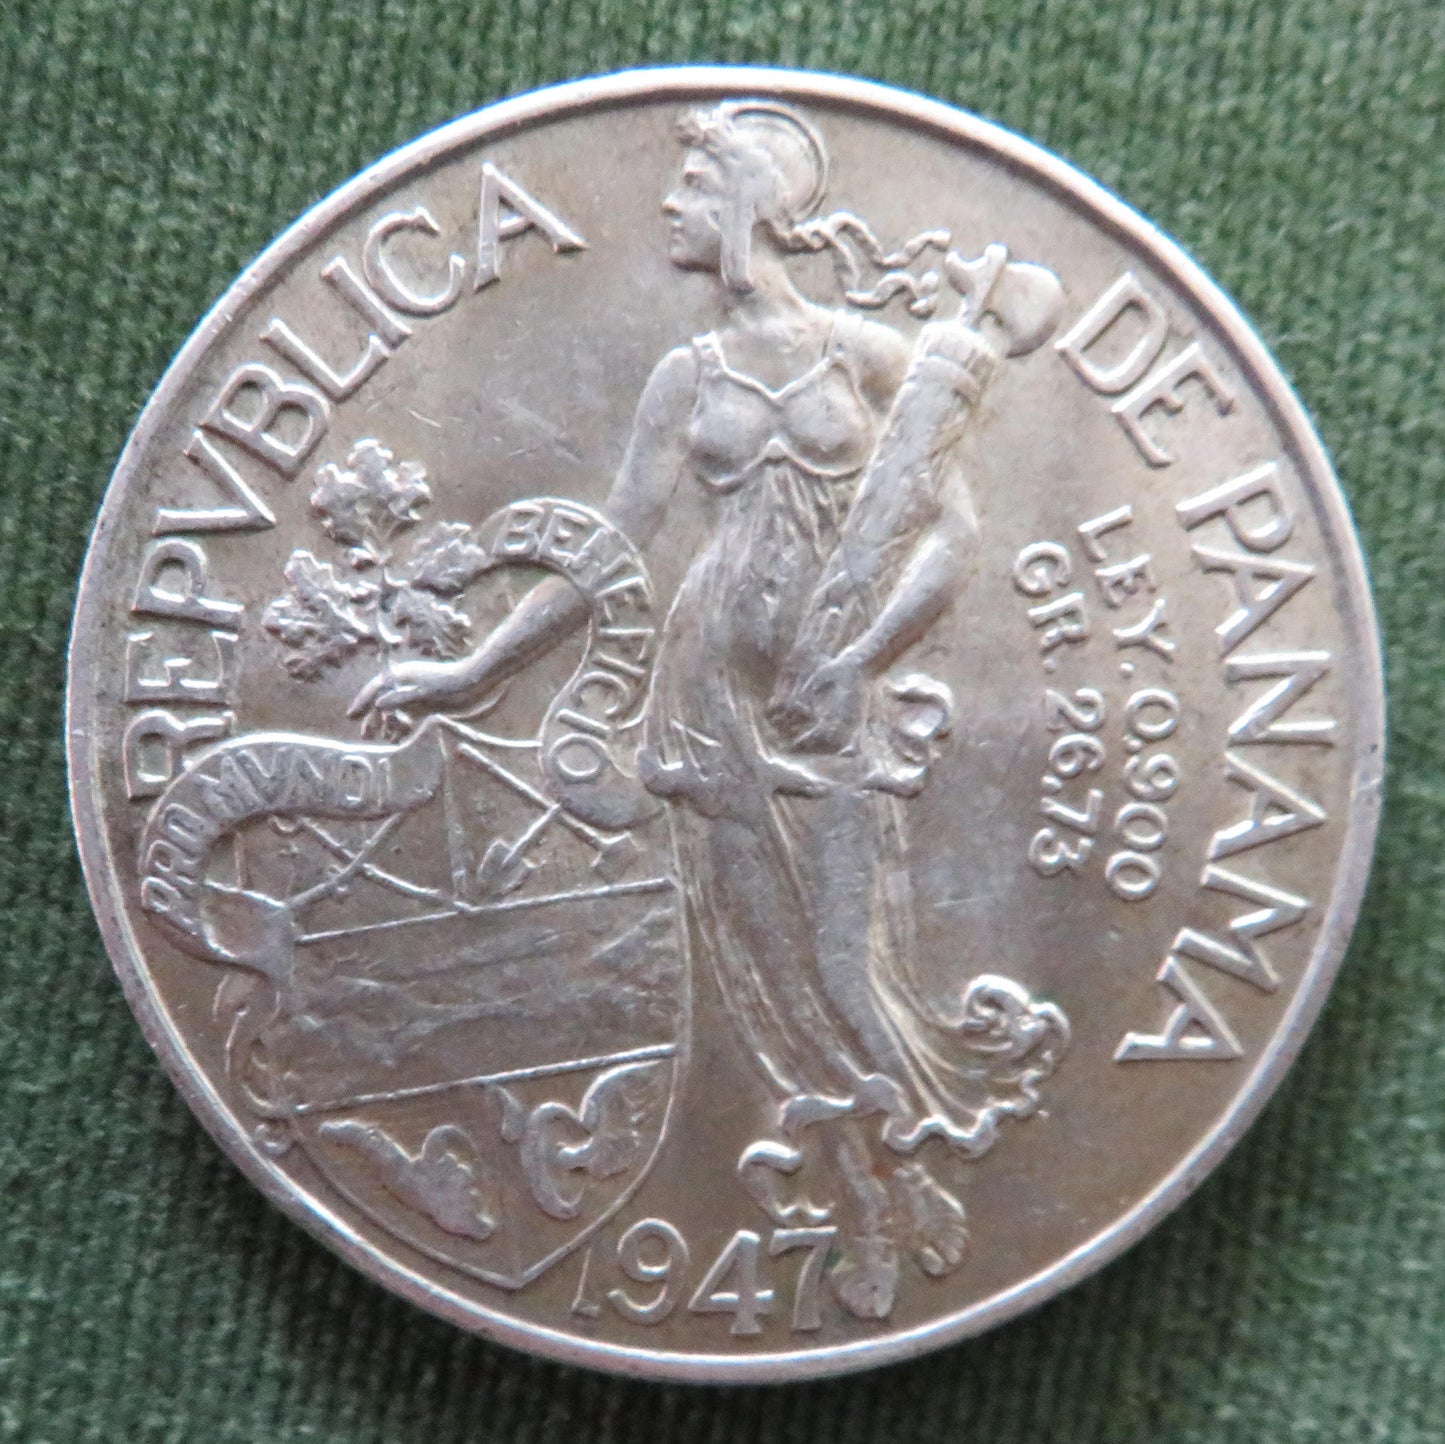 Panama 1947 1 Balboa Silver Coin - EF